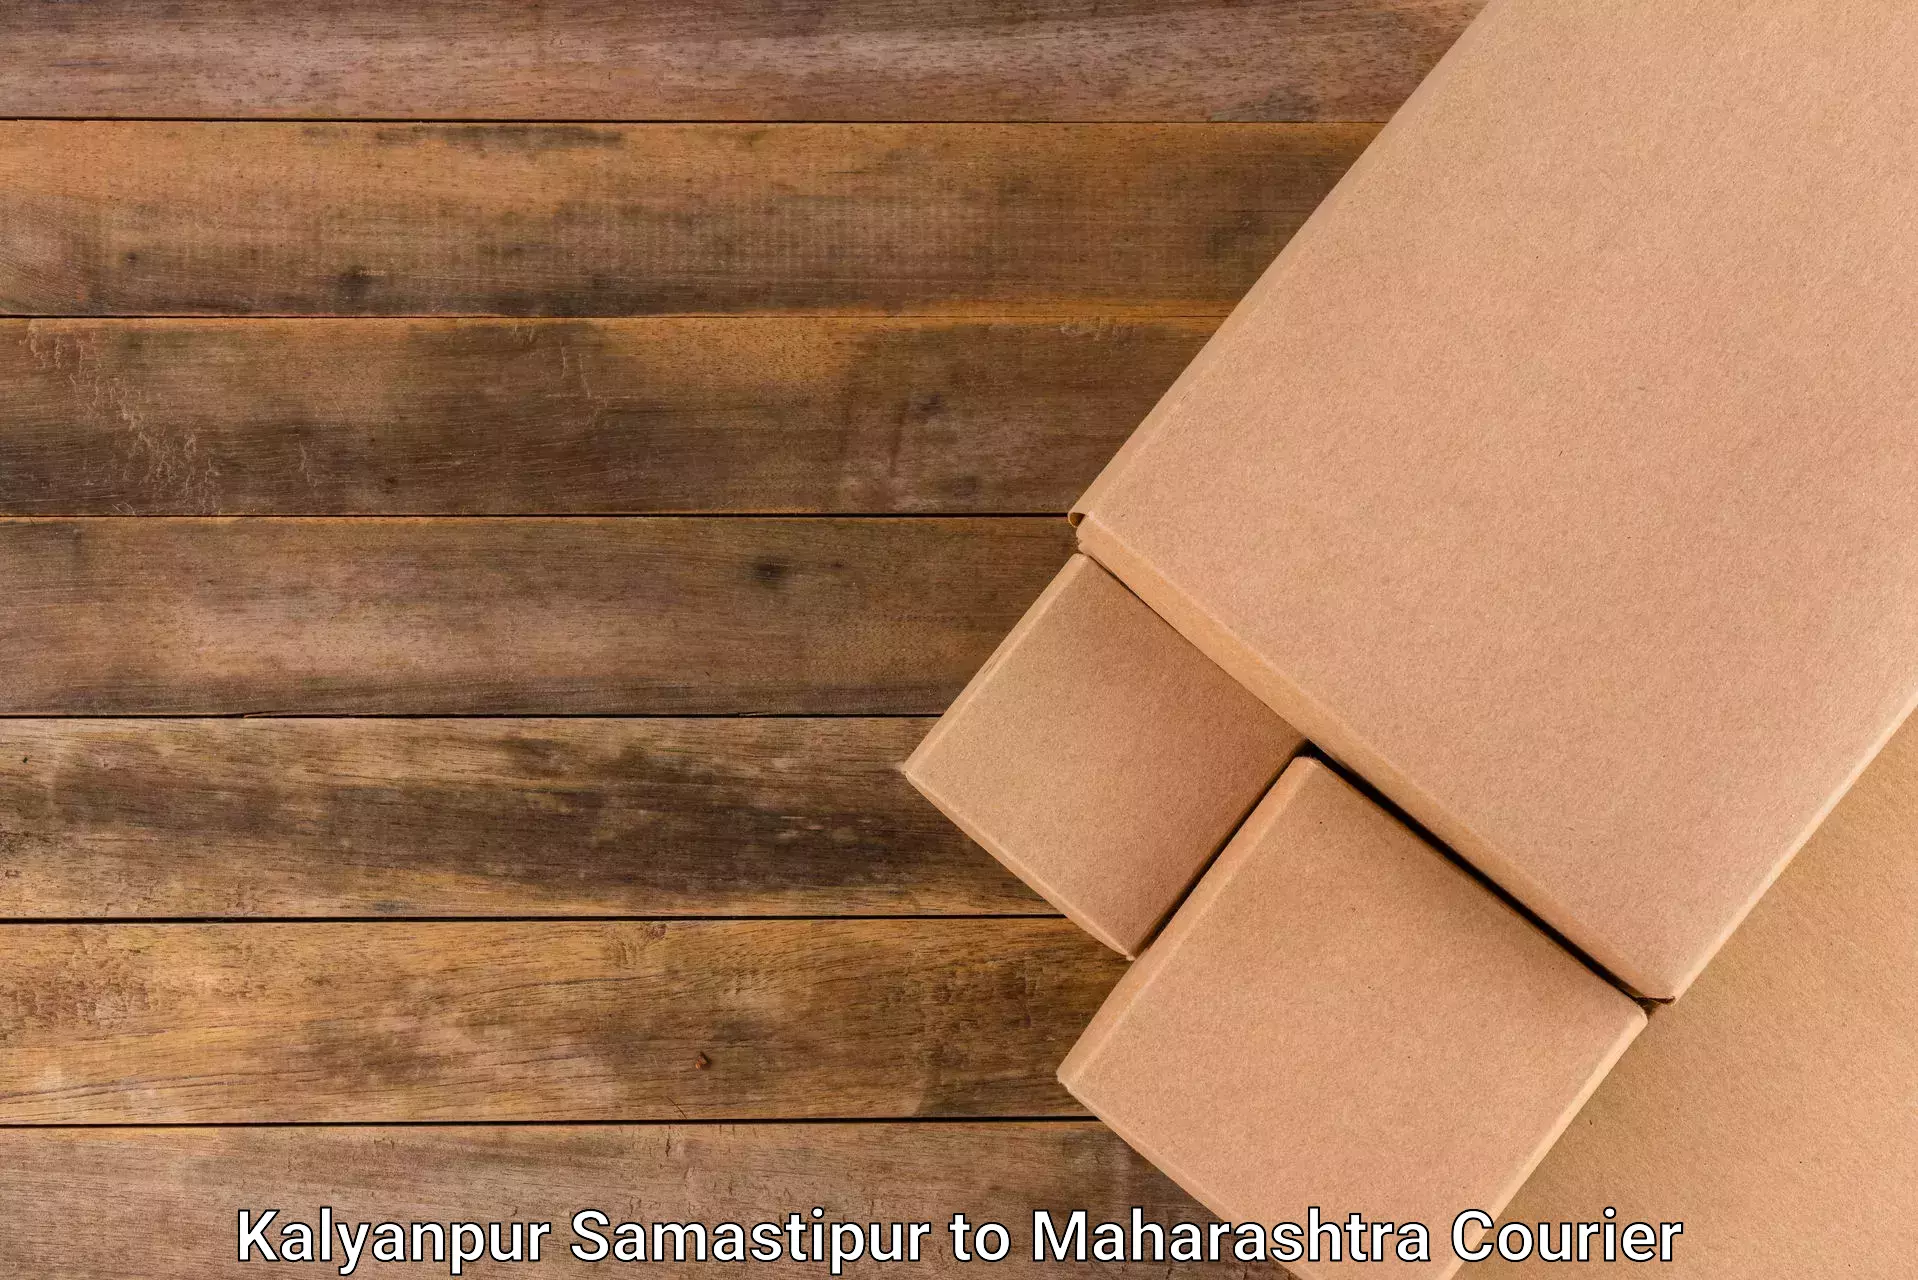 Courier service booking Kalyanpur Samastipur to Maharashtra